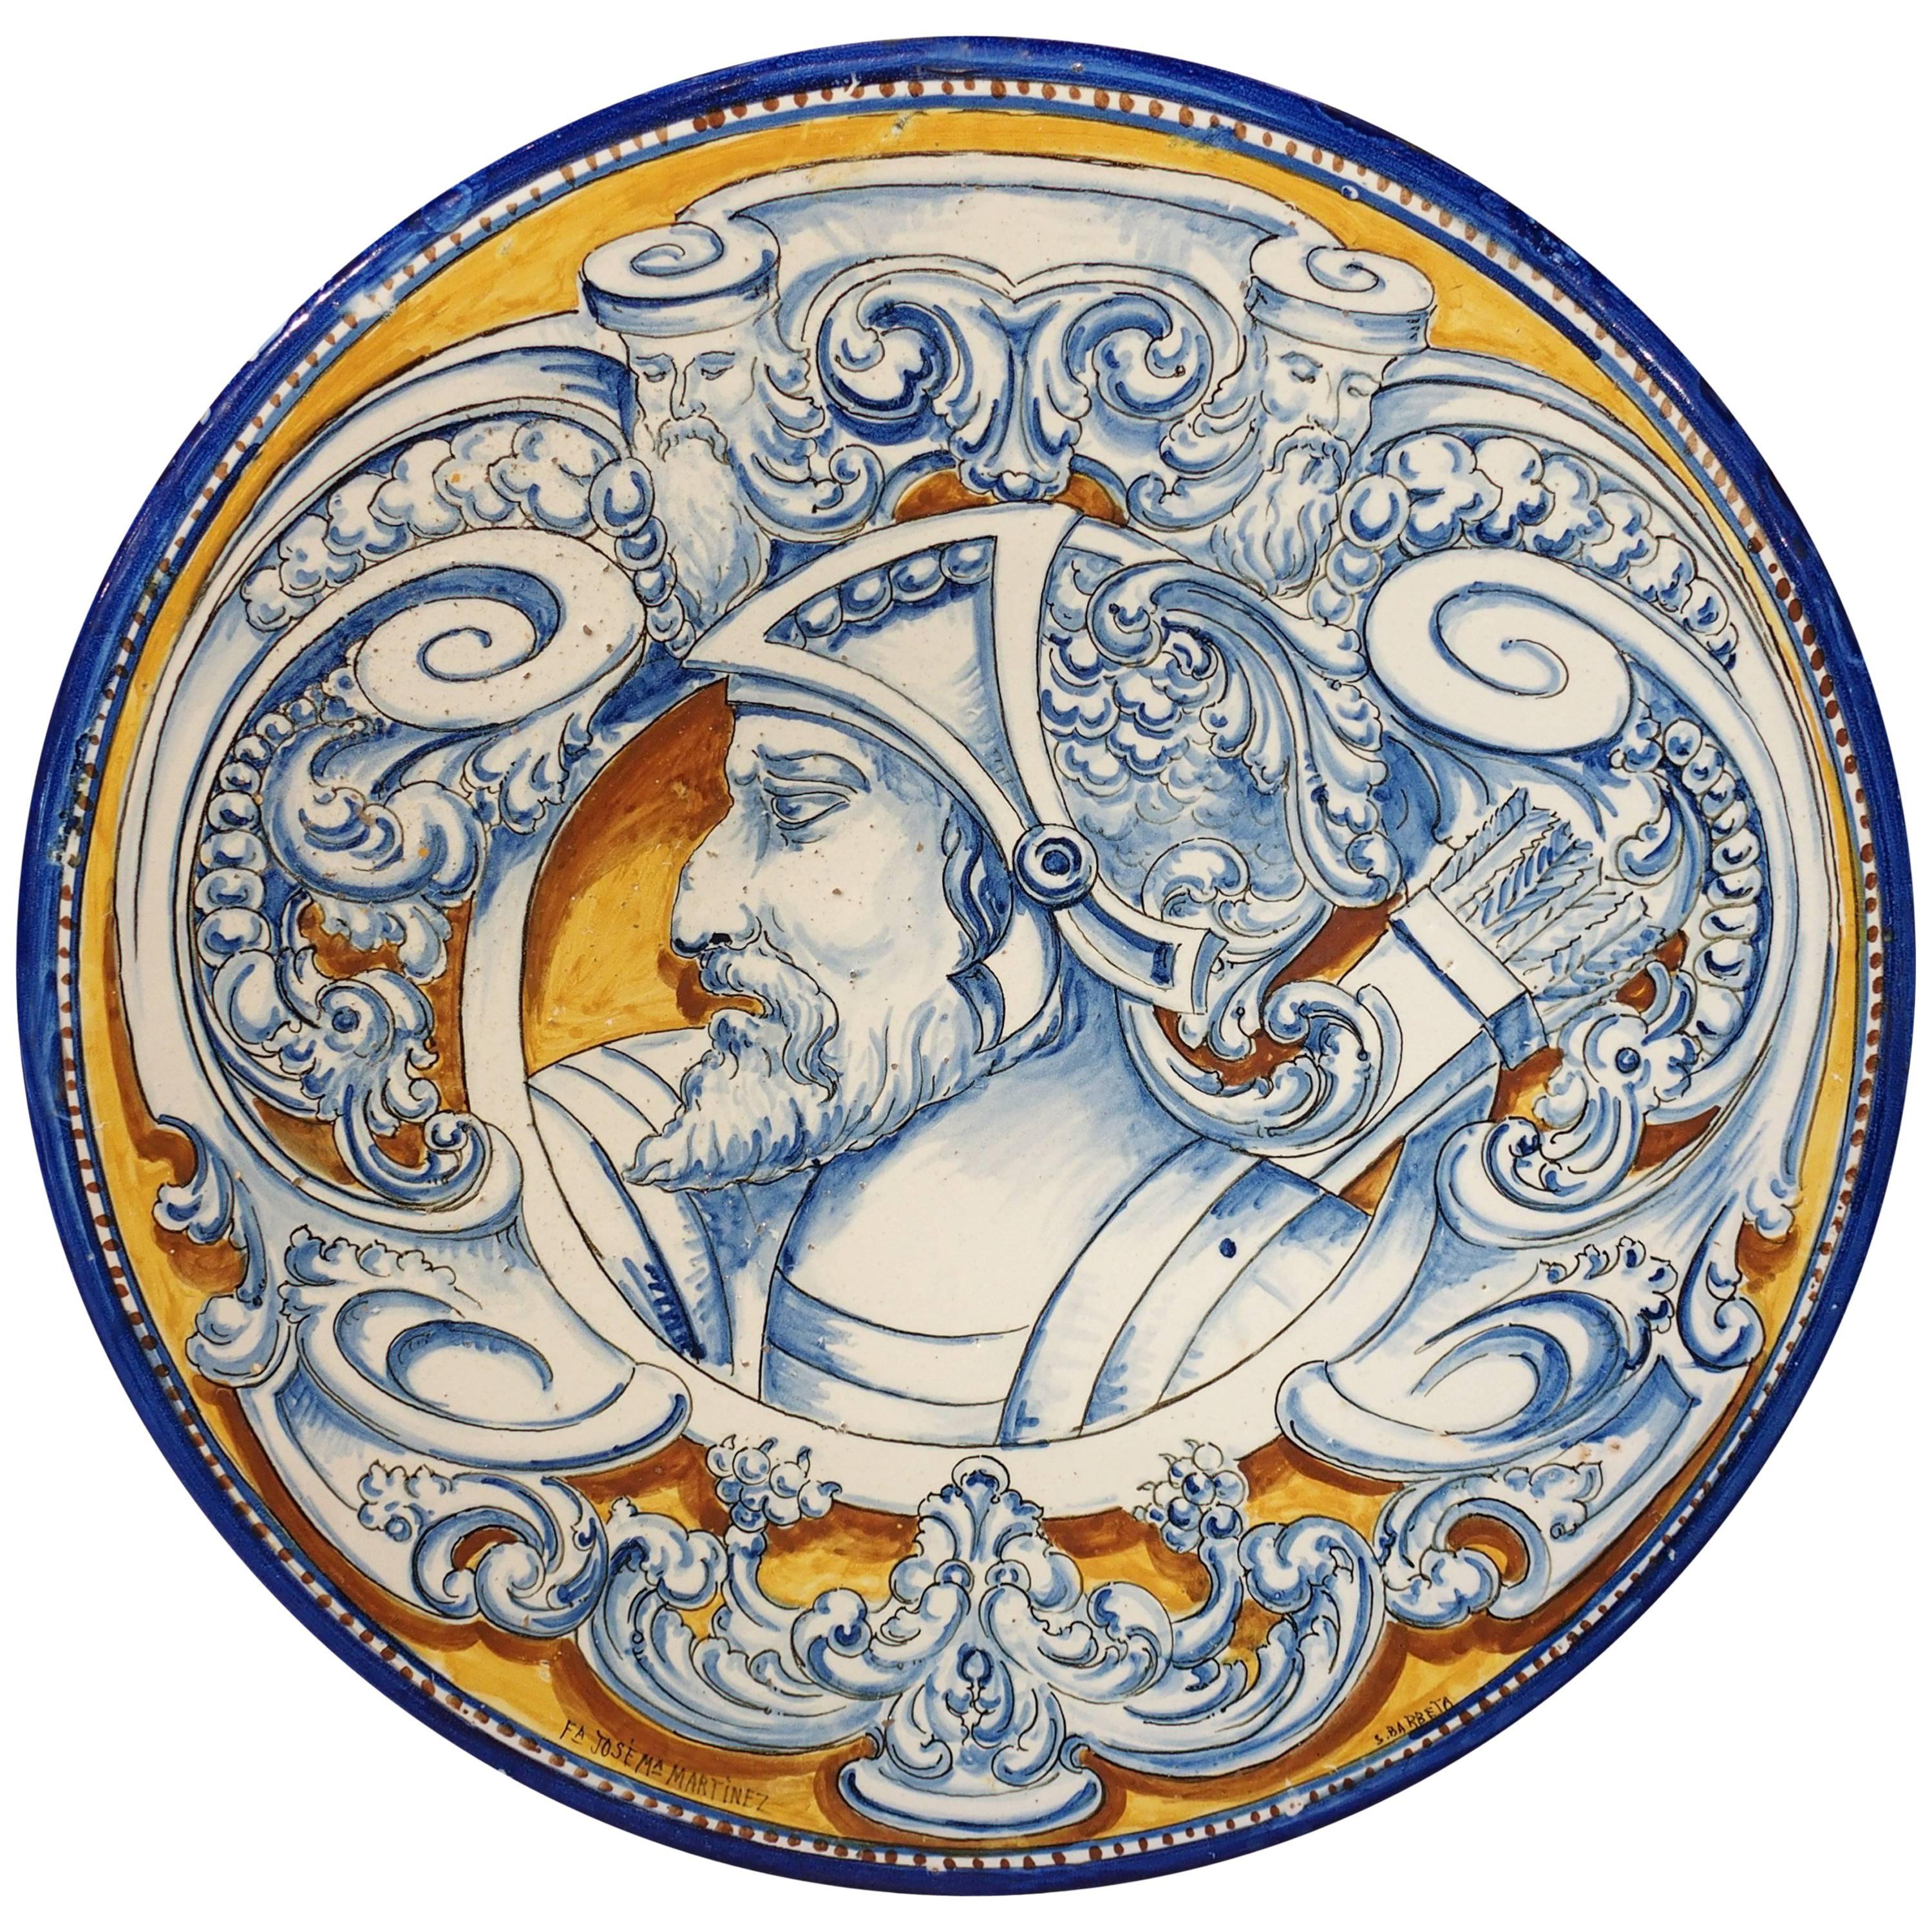 Antique Renaissance Style Platter from Spain